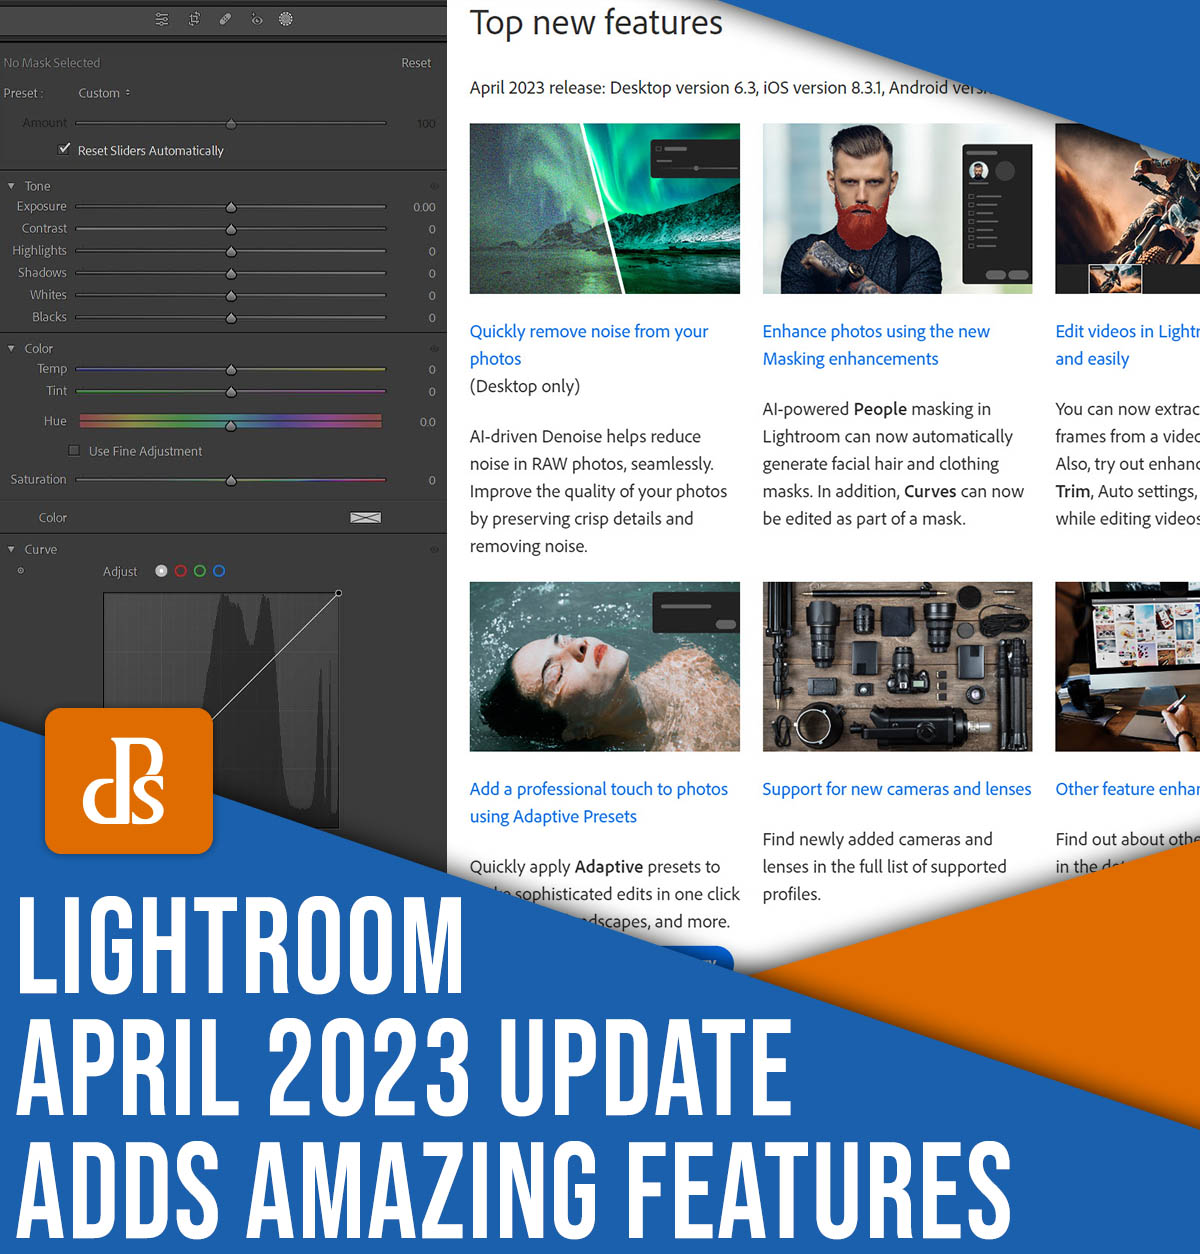 Lightroom April 2023 update adds amazing features